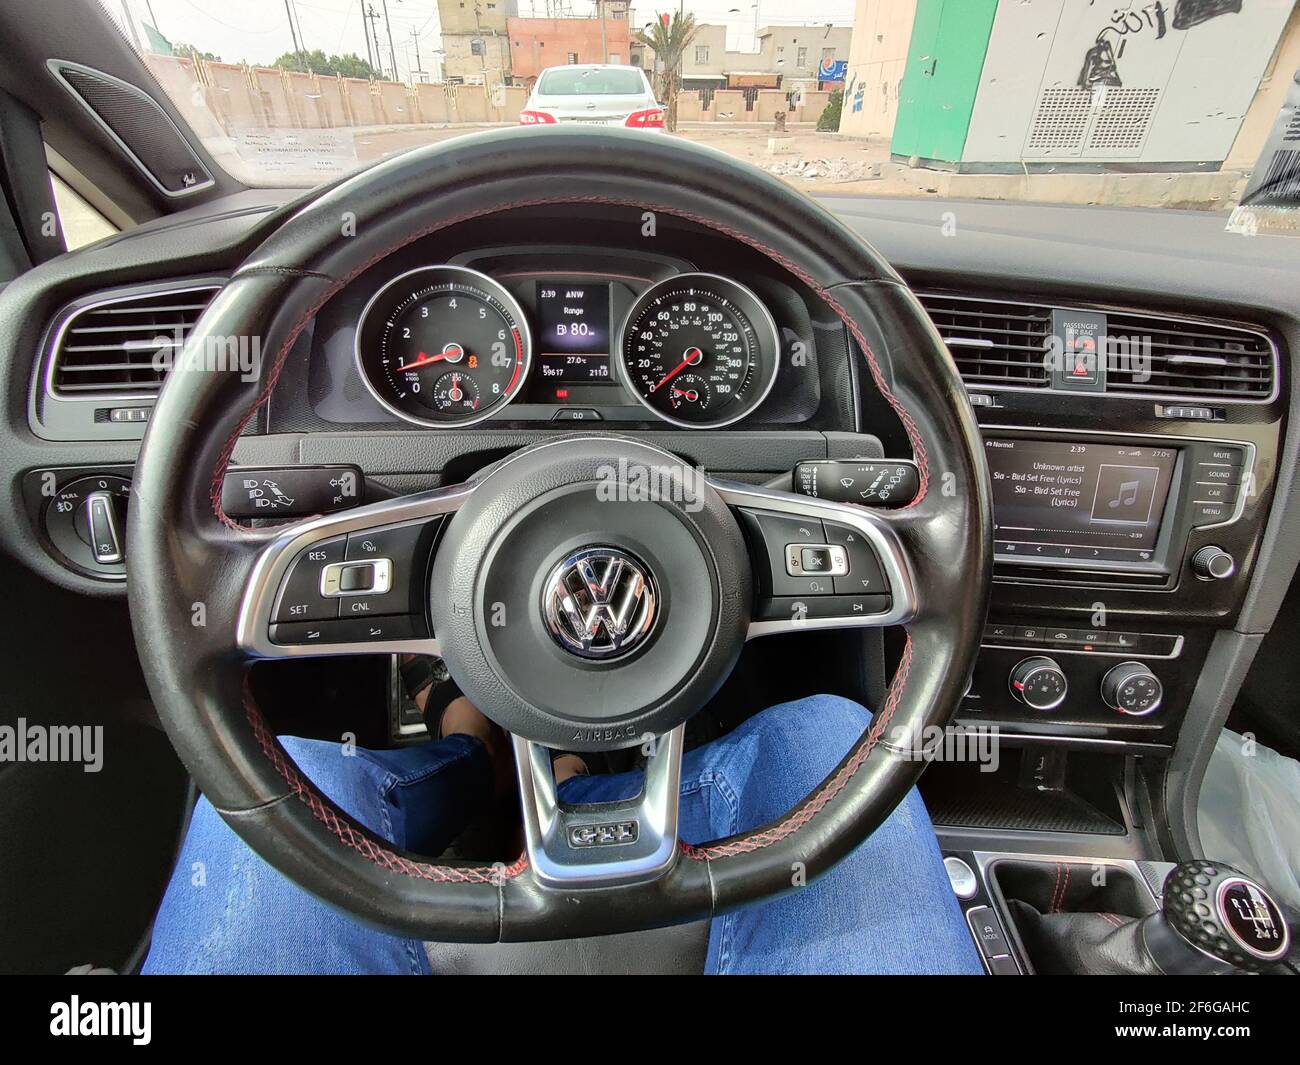 basra, Iraq - january 27, 2019:  photos behaind the car steering wheel Stock Photo